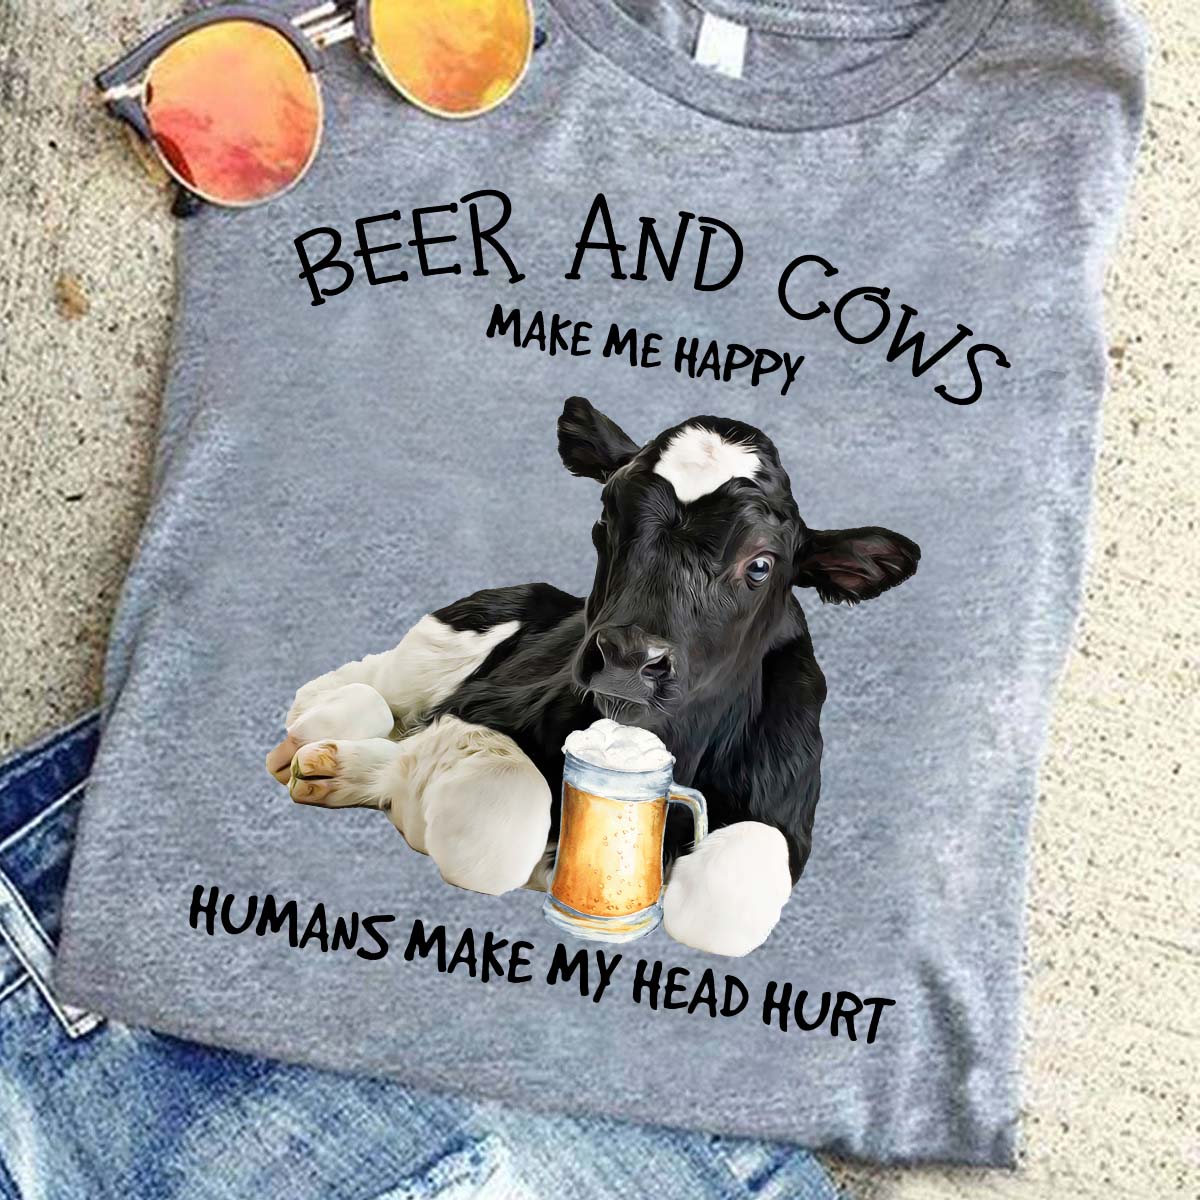 Beer and cớ make me happy humans make my head hurt